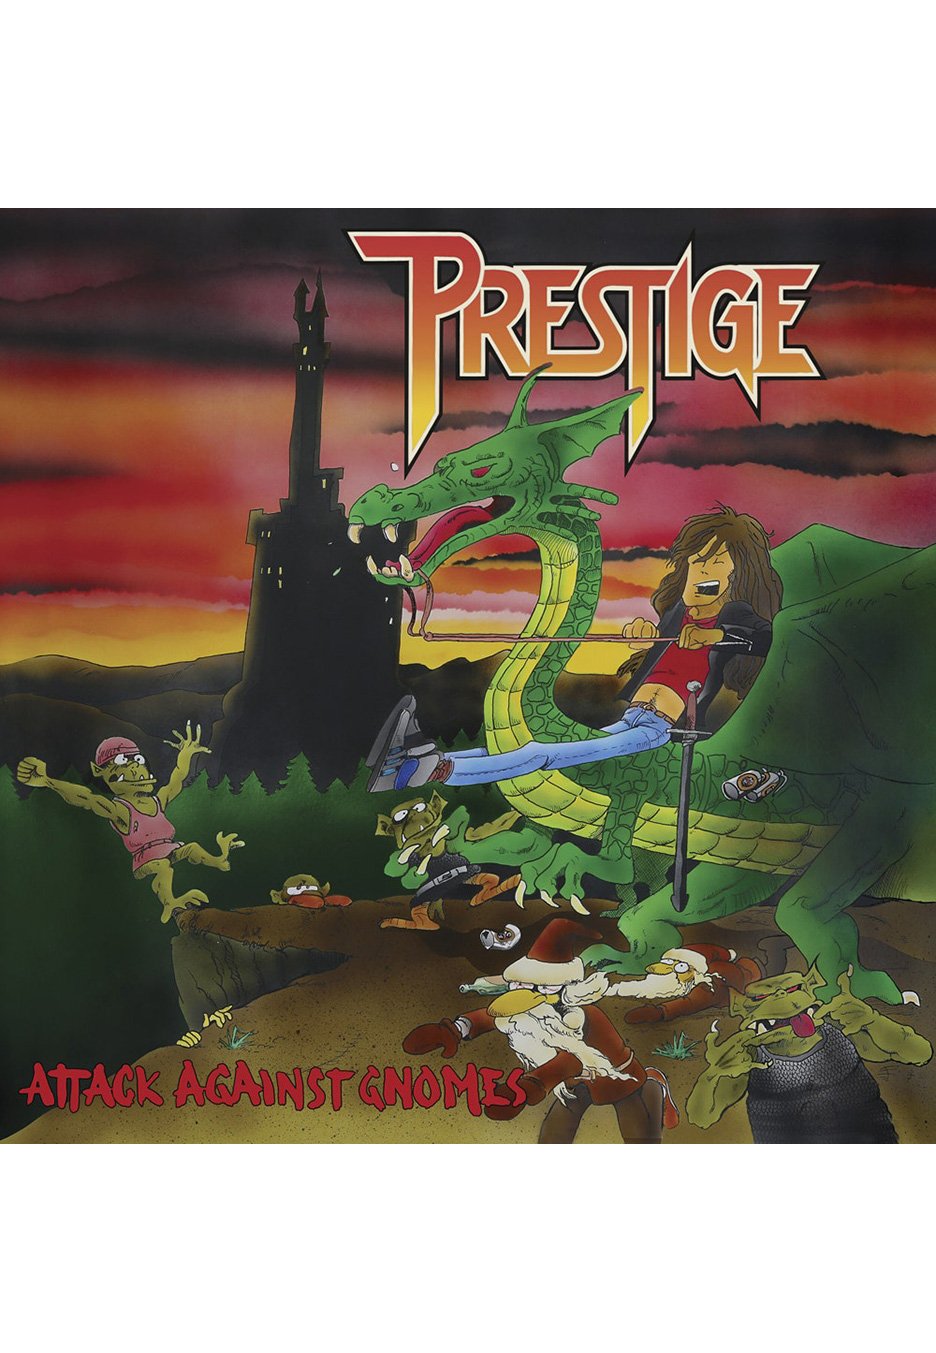 Prestige - Attack Against Gnomes (Reissue) - Vinyl